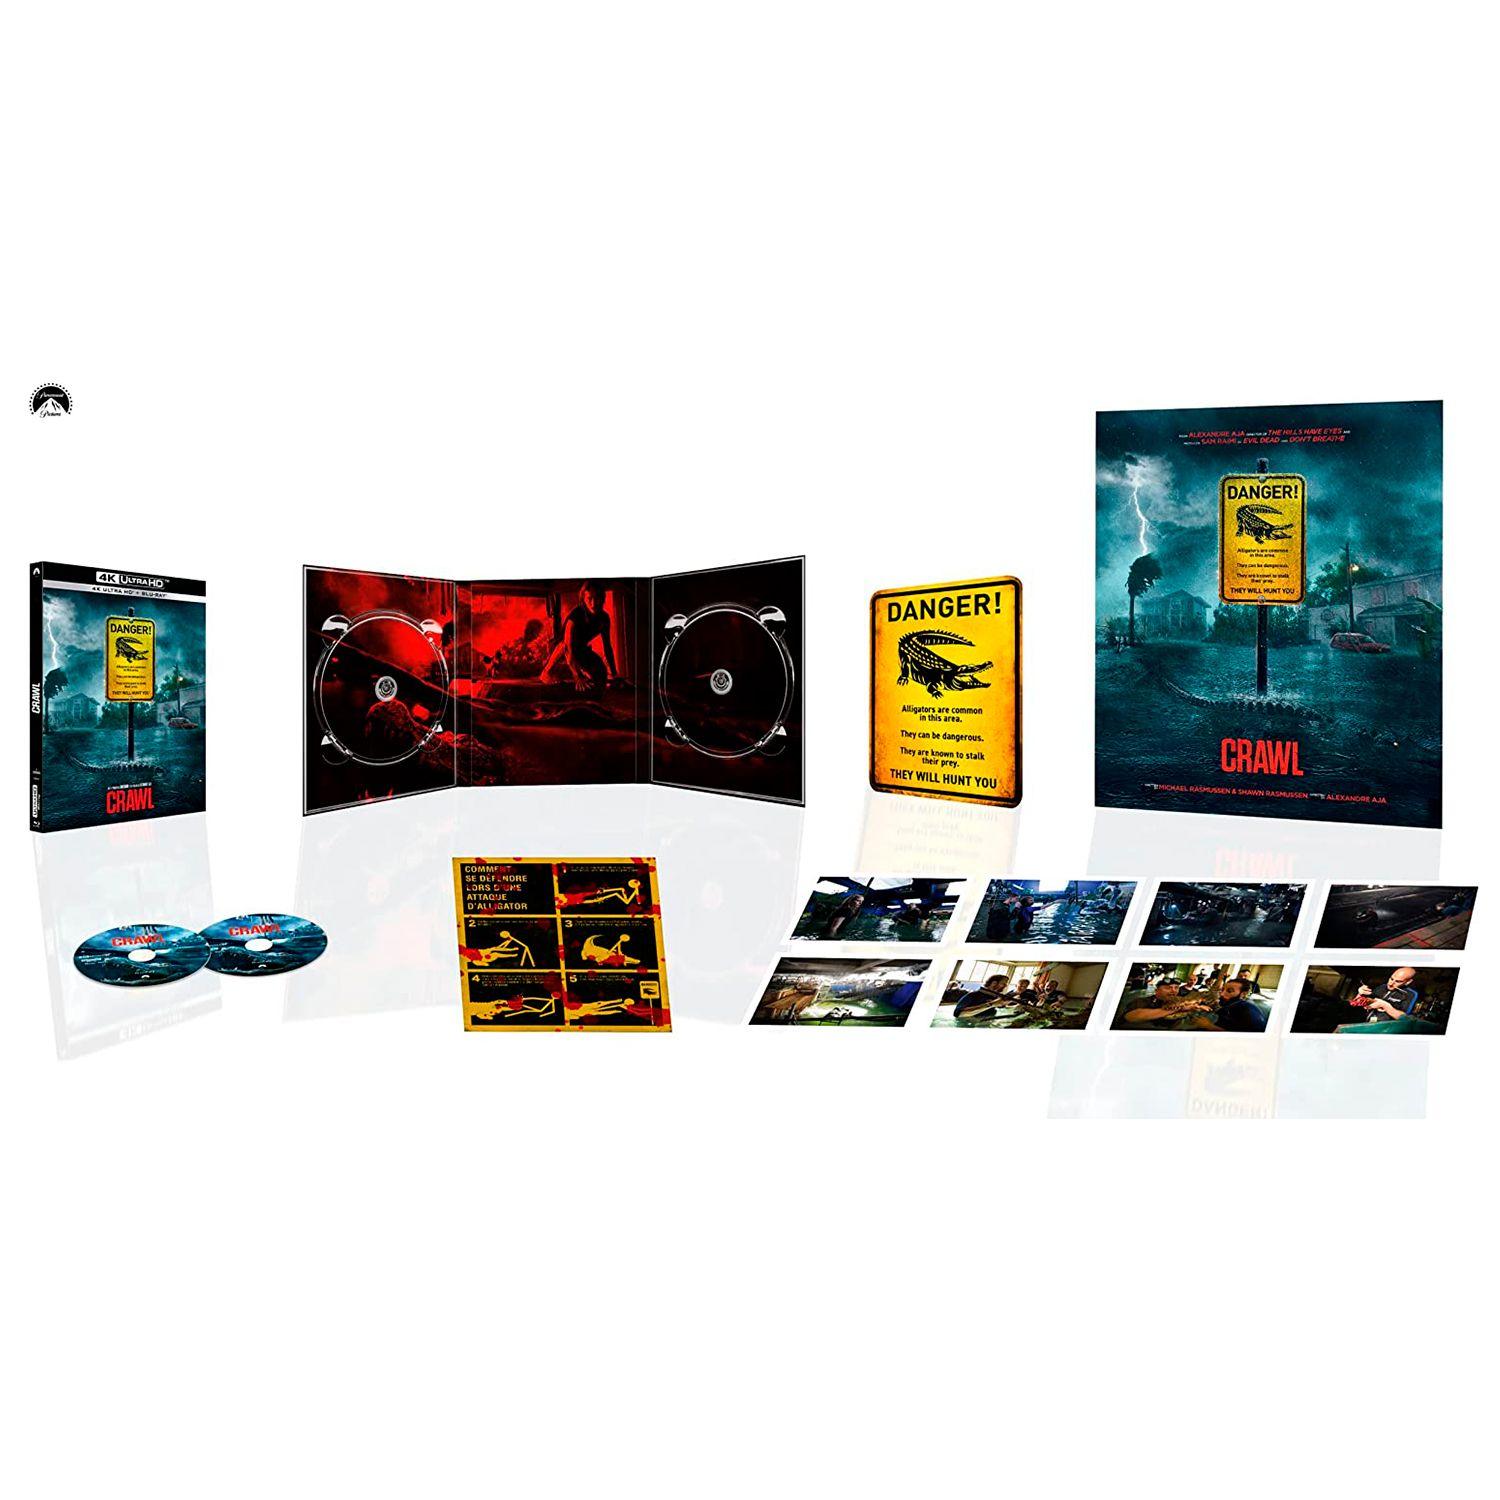 Капкан (4K UHD + Blu-ray) Коллекционное издание